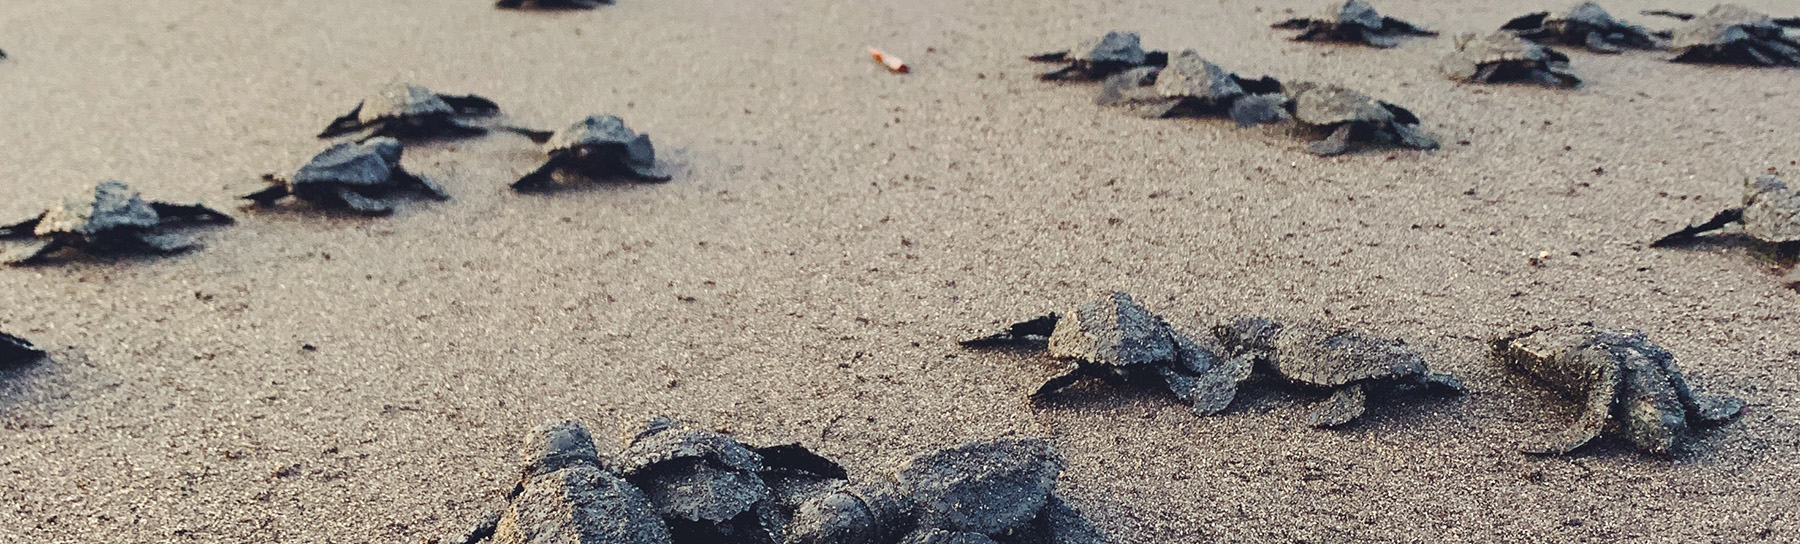 Charleston Coffee Roasters Header image with baby sea turtles